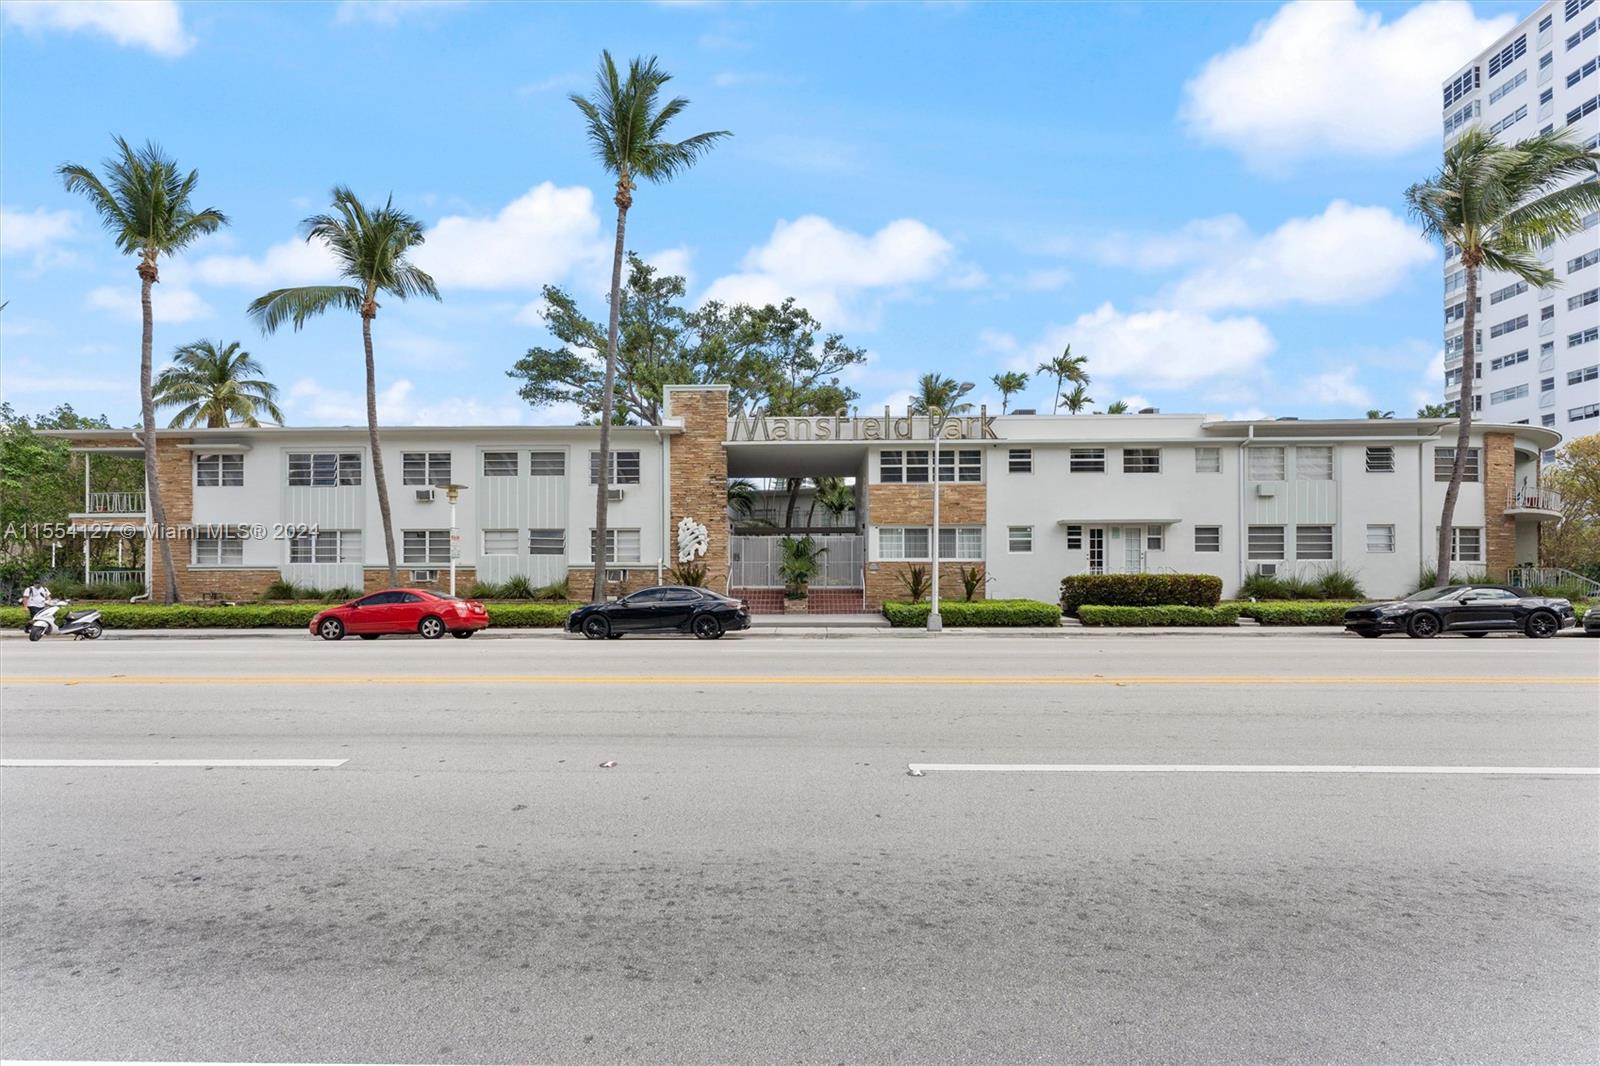 Property for Sale at 1925 Washington Ave 21, Miami Beach, Miami-Dade County, Florida - Bedrooms: 1 
Bathrooms: 1  - $224,900